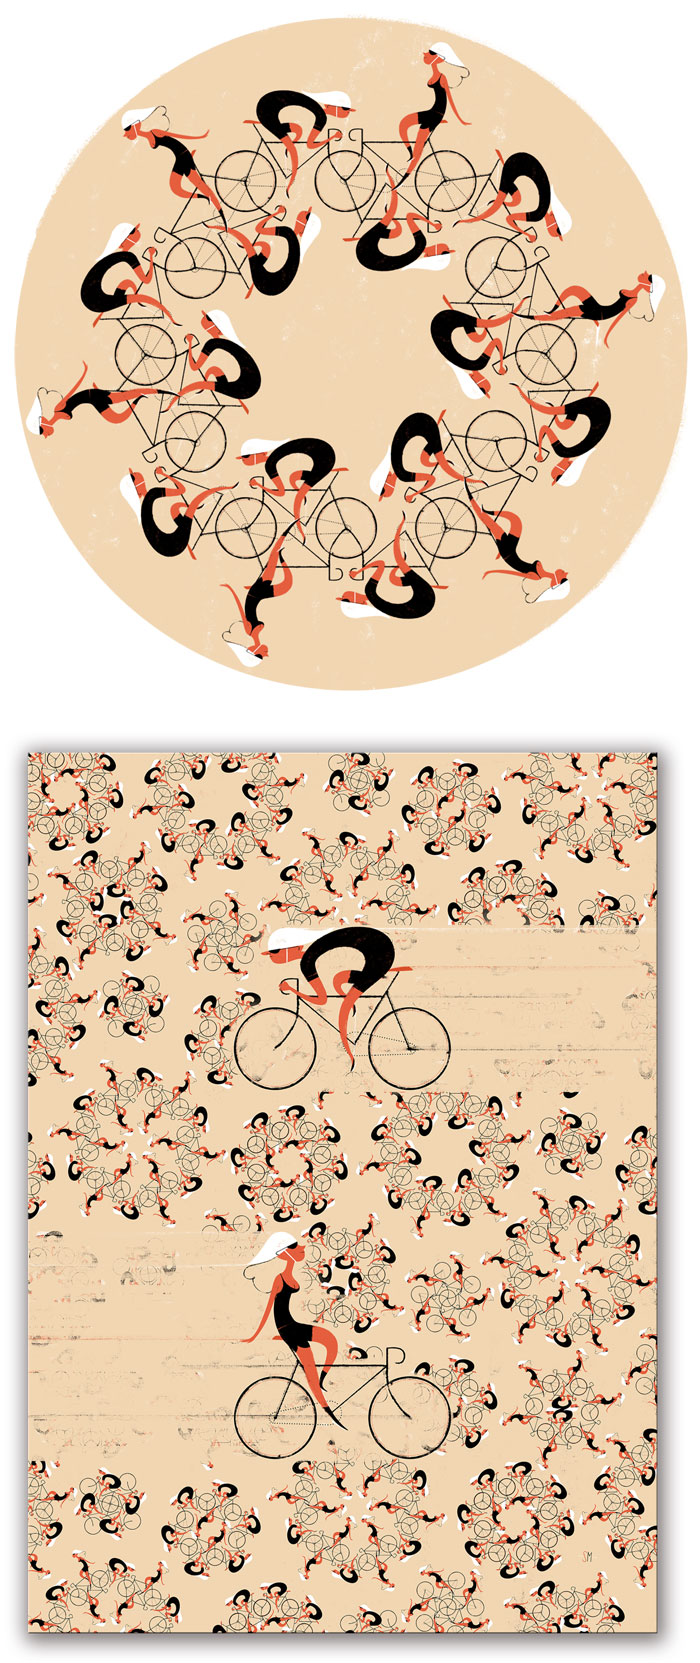 Simone Massoni / Pattern & poster design - Bicycle Film Festival